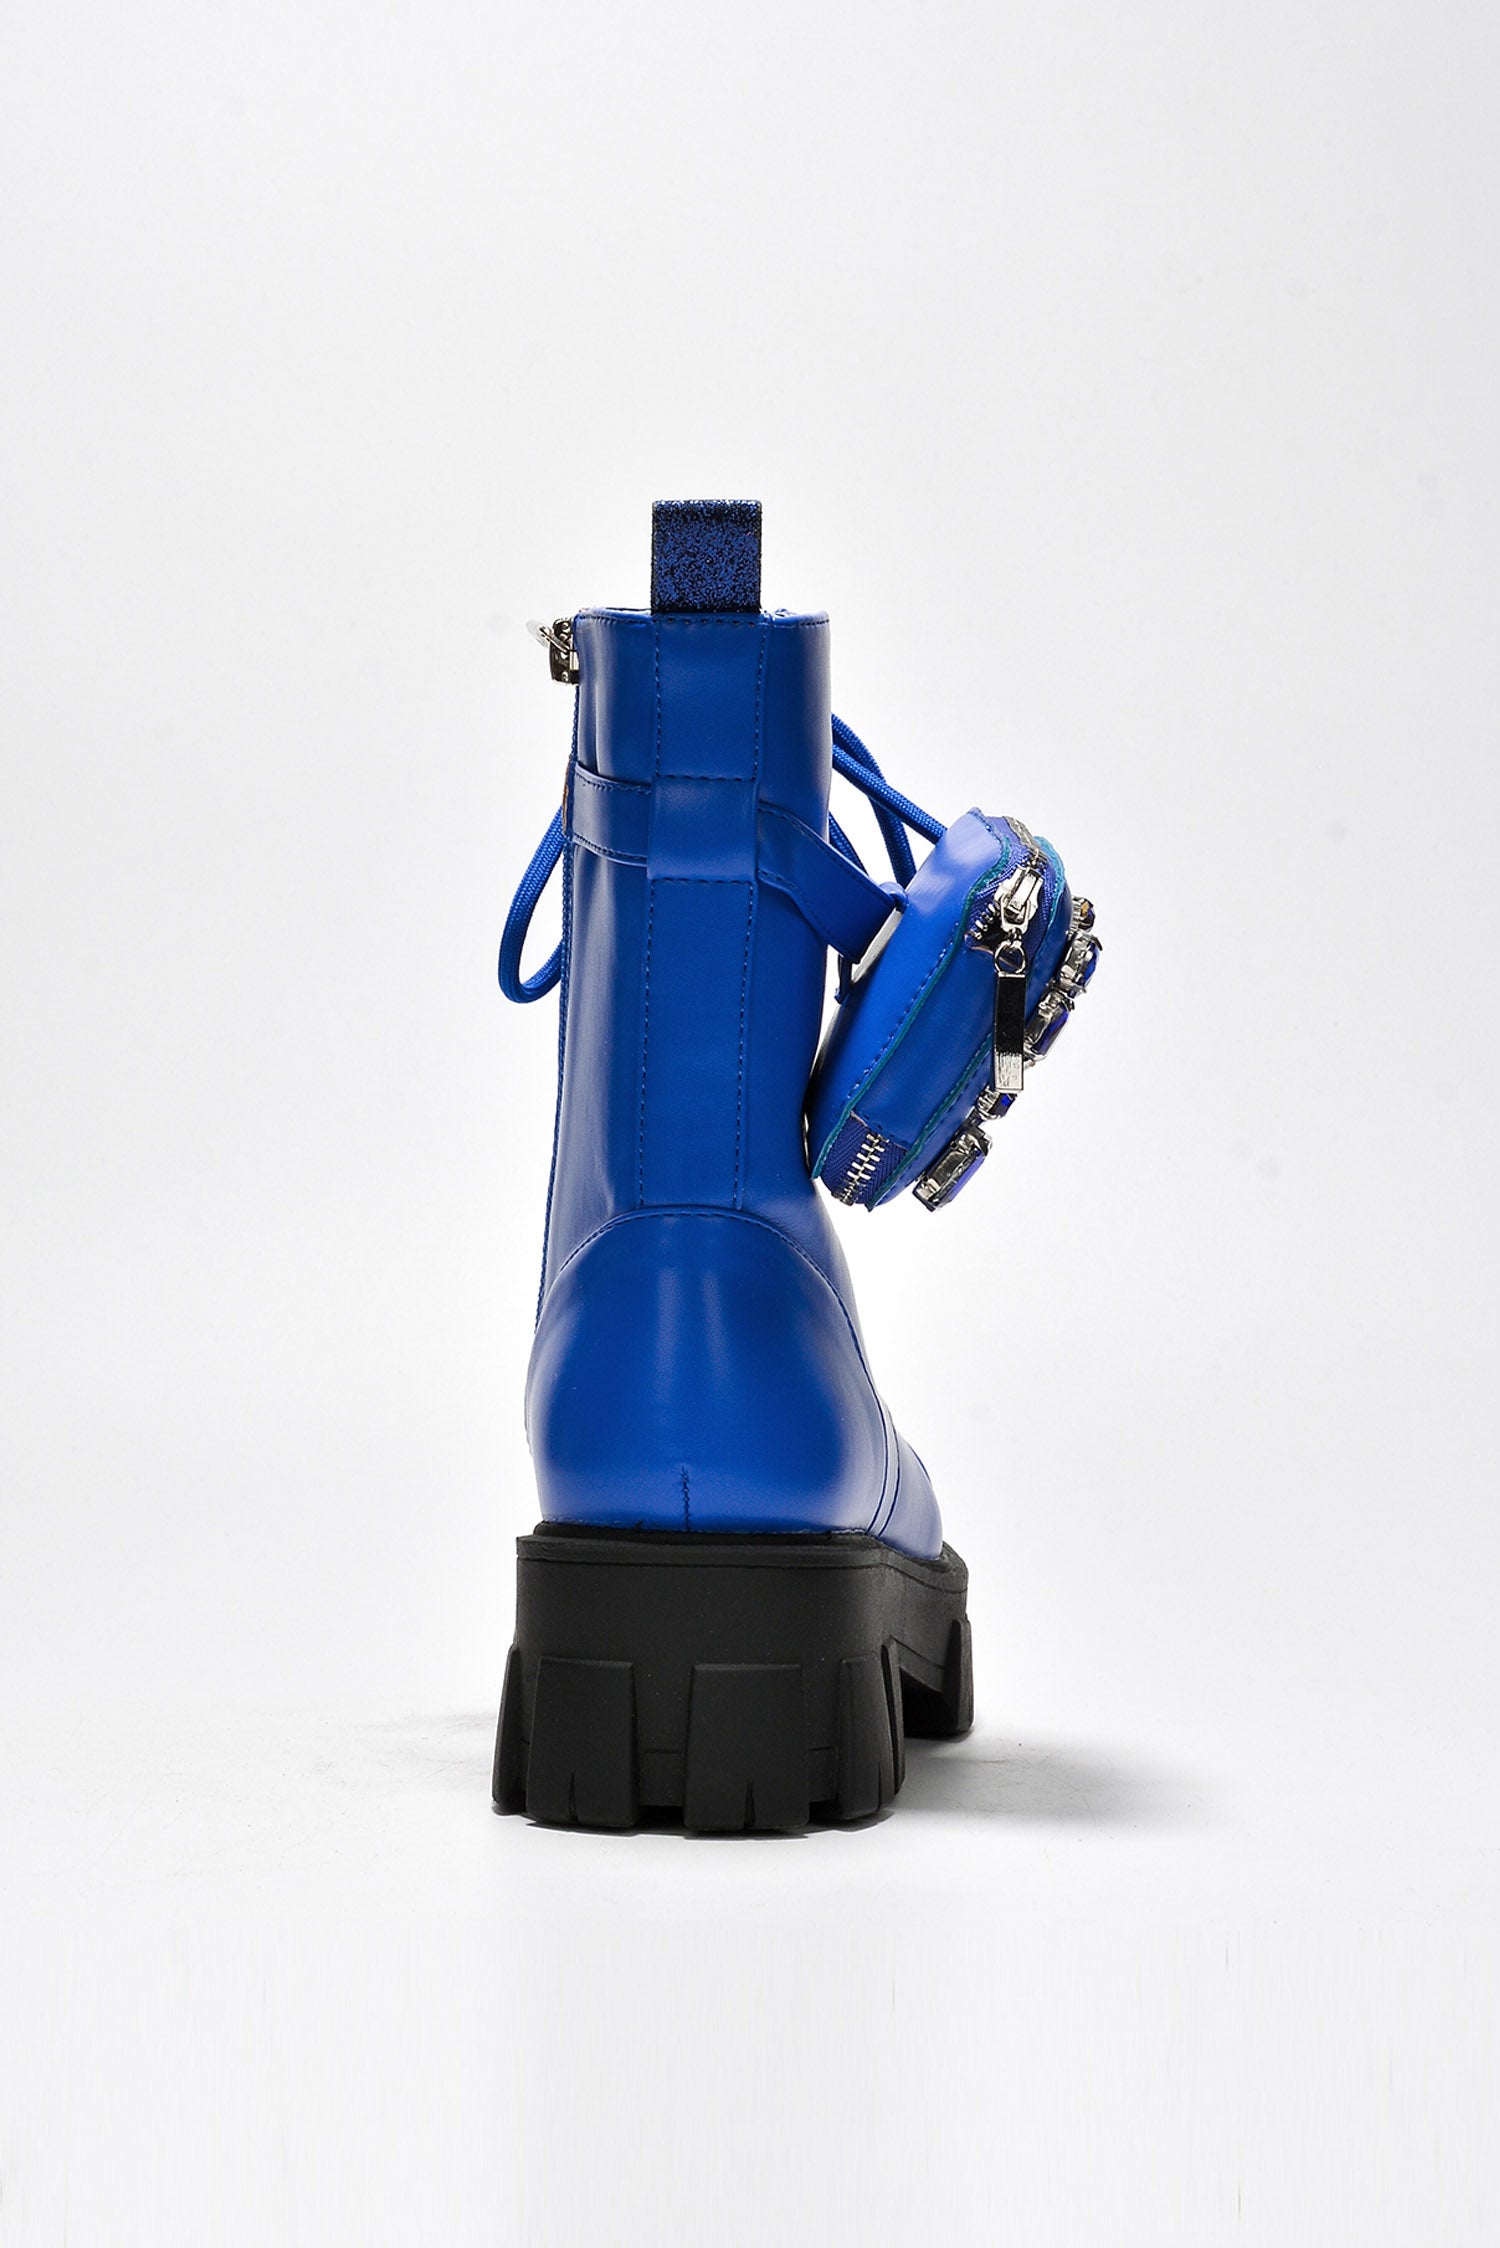 UrbanOG - Nemoya Gem-Studded Pouch Stylish Combat Boots - BOOTIES